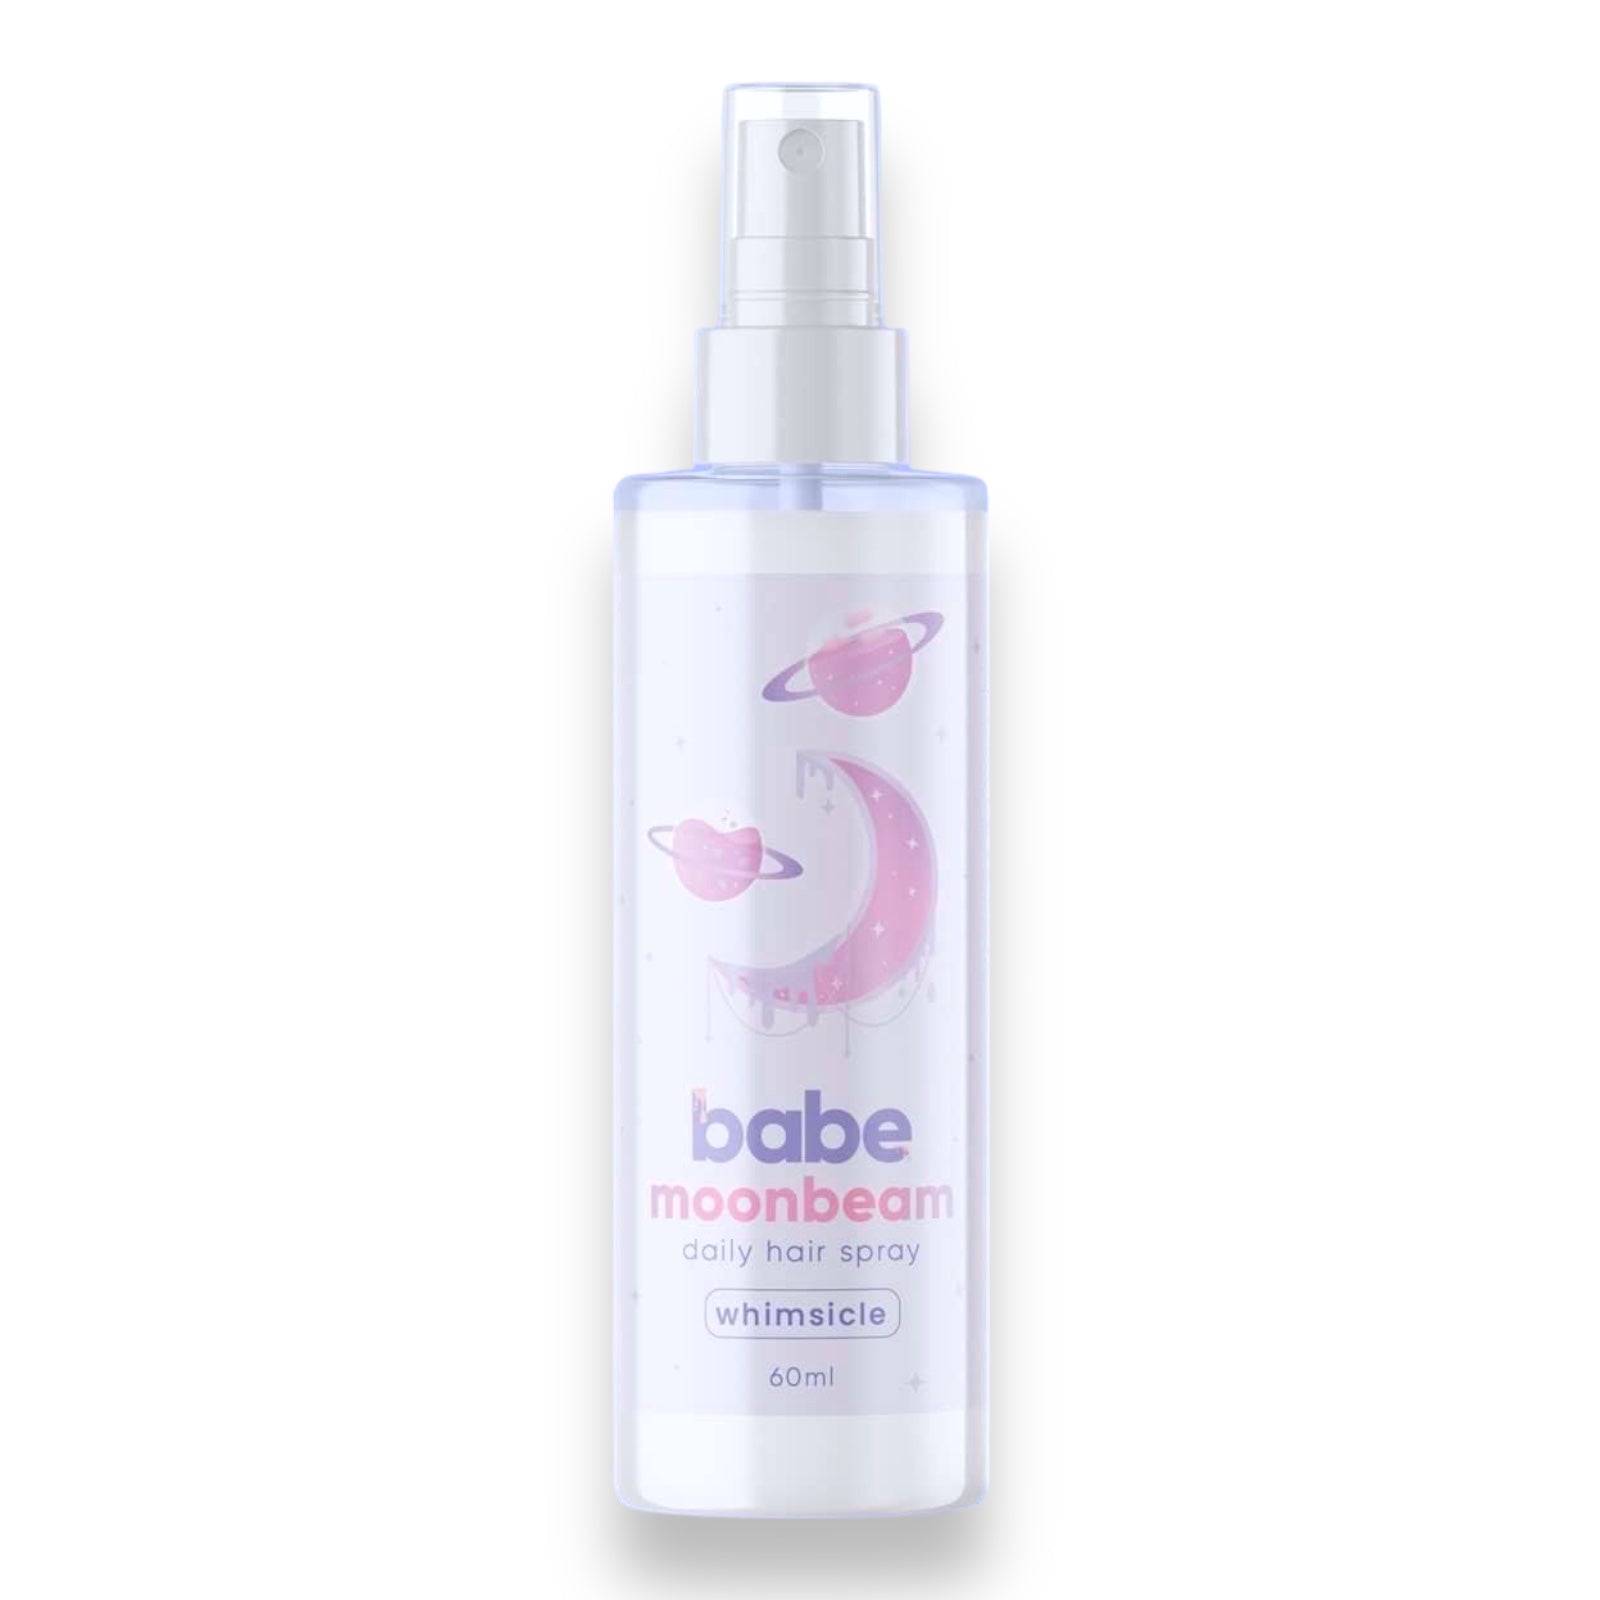 Babe Formula - Moonbeam Daily Hair Spray ( WHIMSICLE ) purple bottle - 60 ML